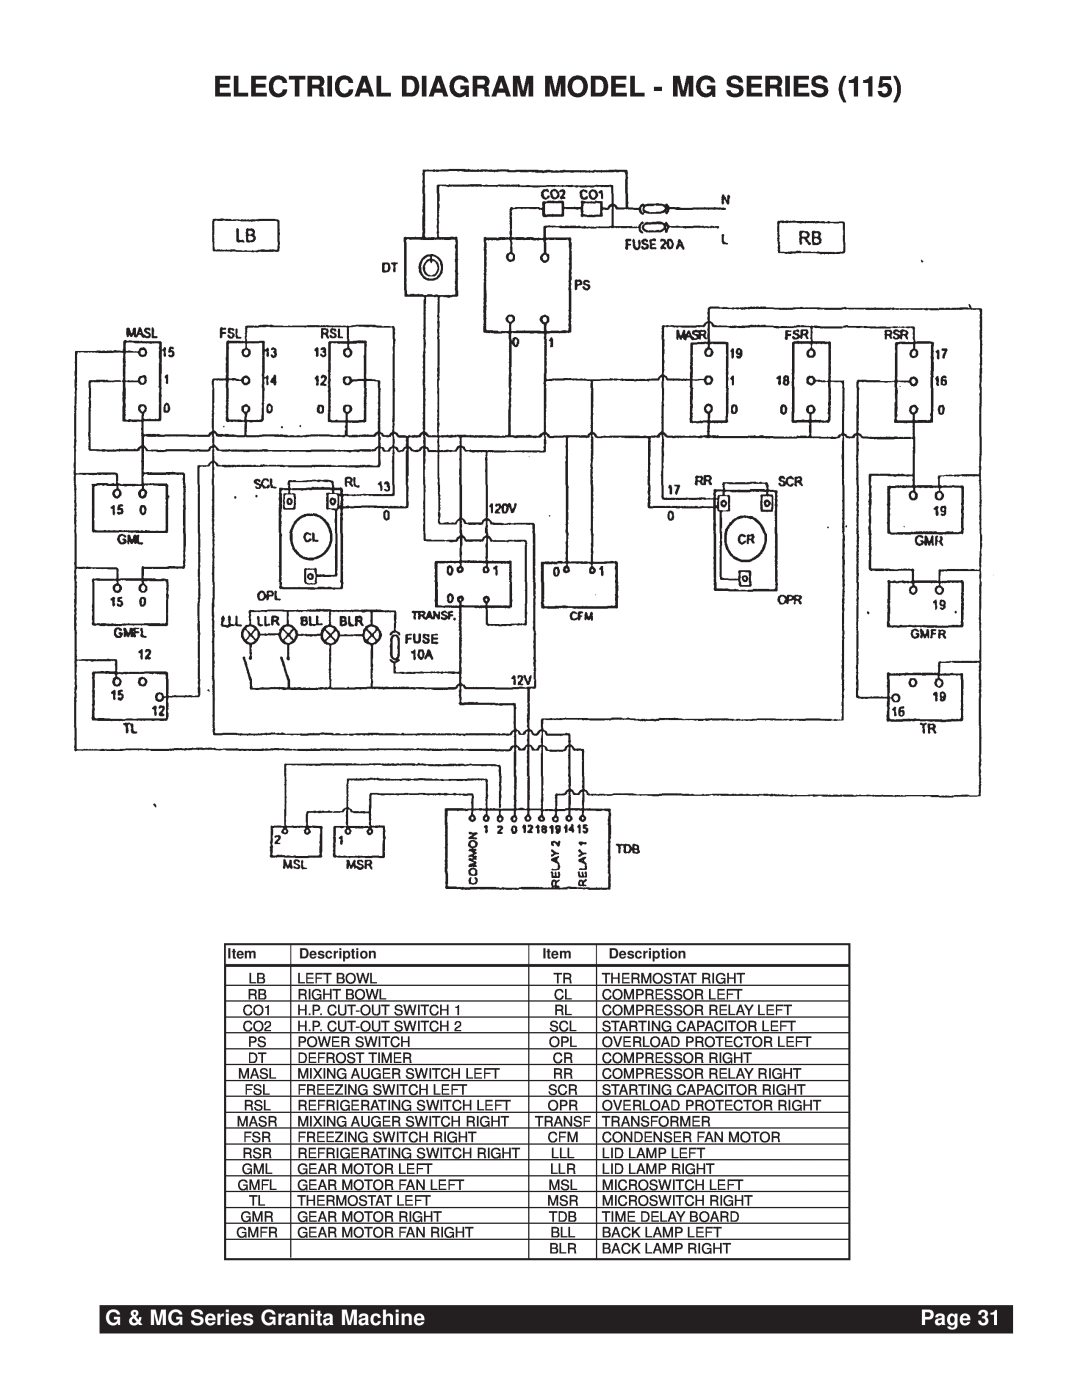 Grindmaster instruction manual Electrical Diagram Model - Mg Series, G & MG Series Granita Machine, Page, Description 